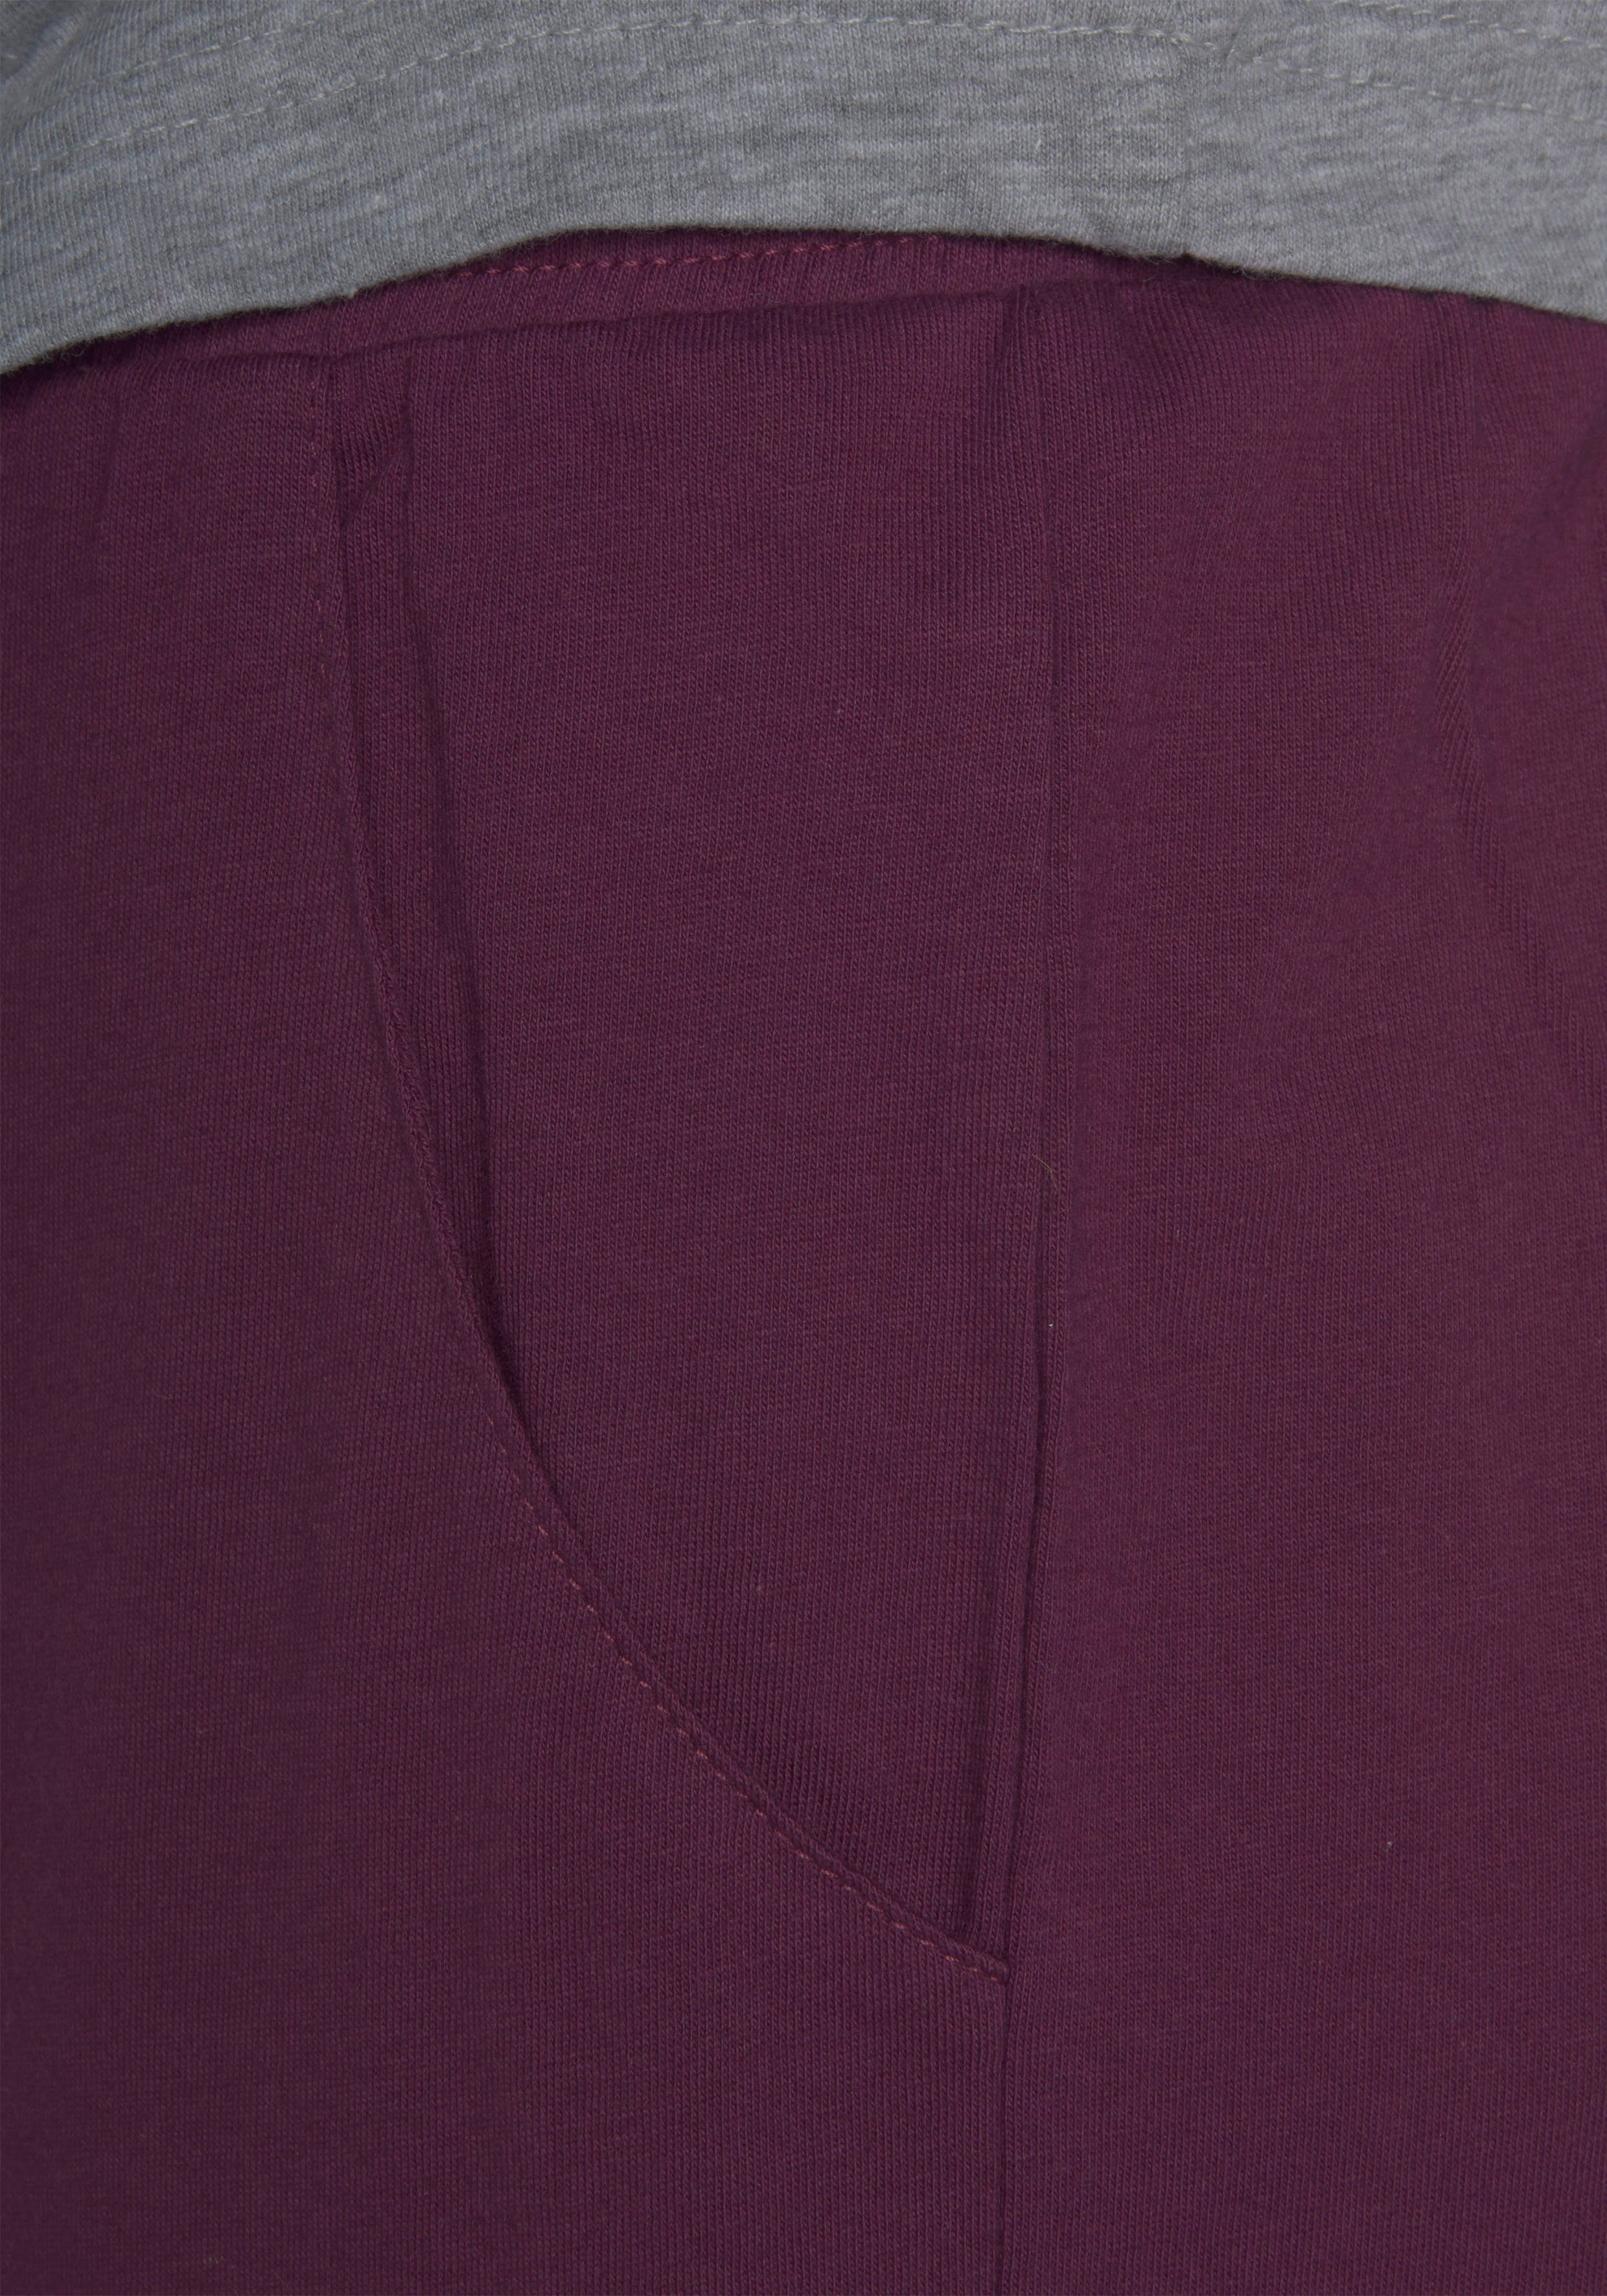 (2 KangaROOS mit 1 Pyjama Raglanärmeln kontrastfarbenen Stück) tlg., bordeaux-grau-meliert